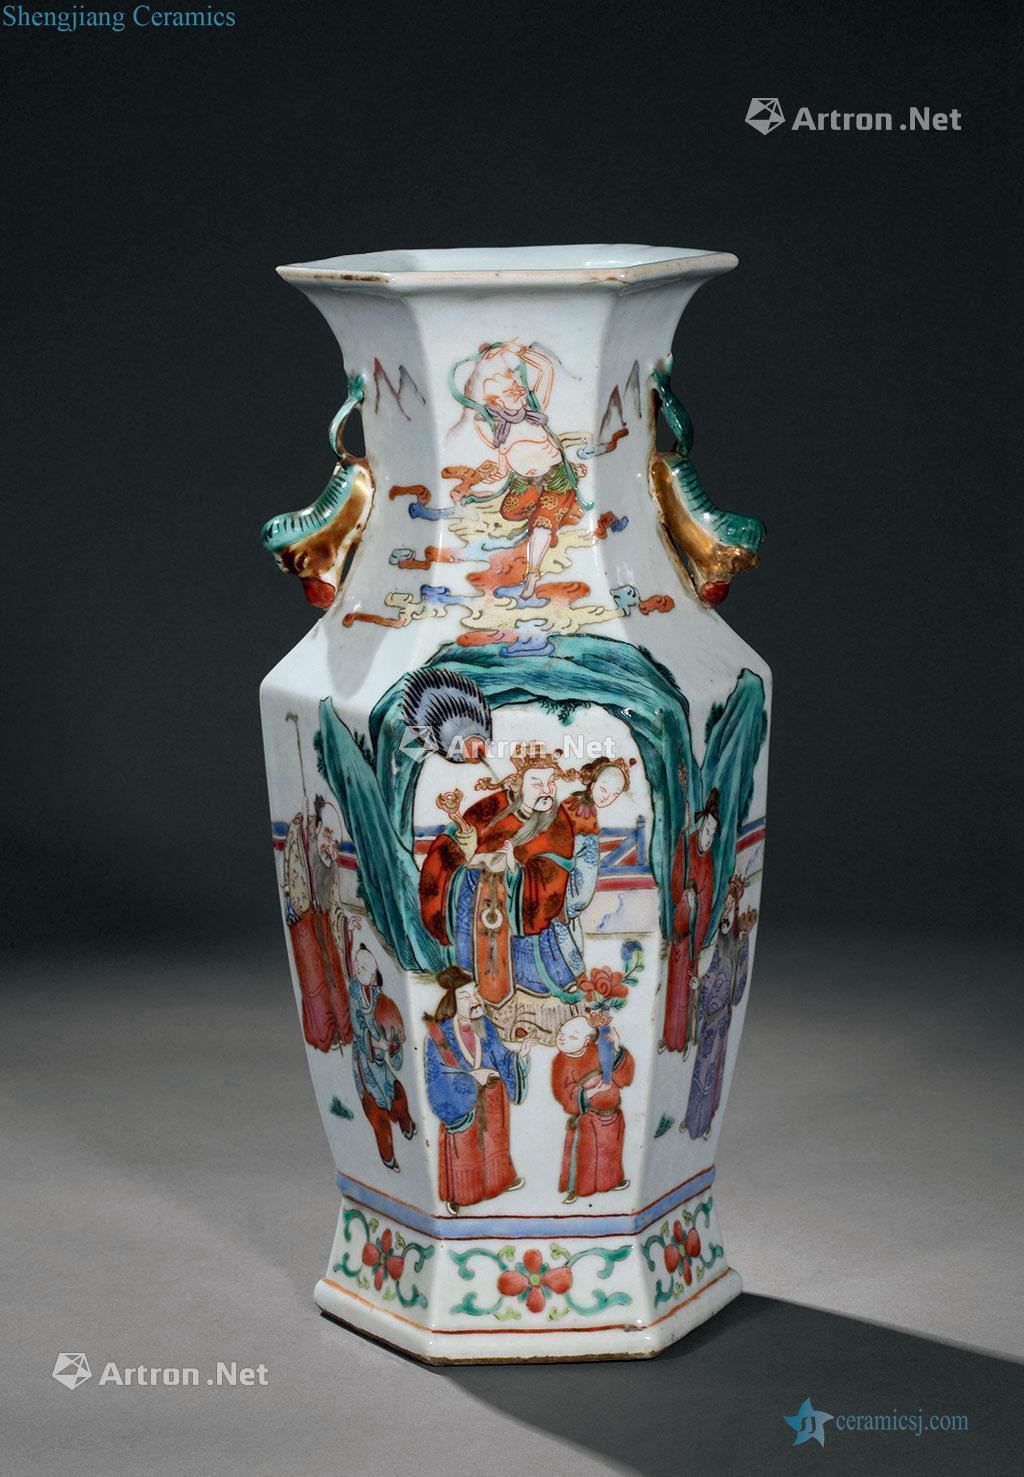 Qing dynasty vase pastel fairy story